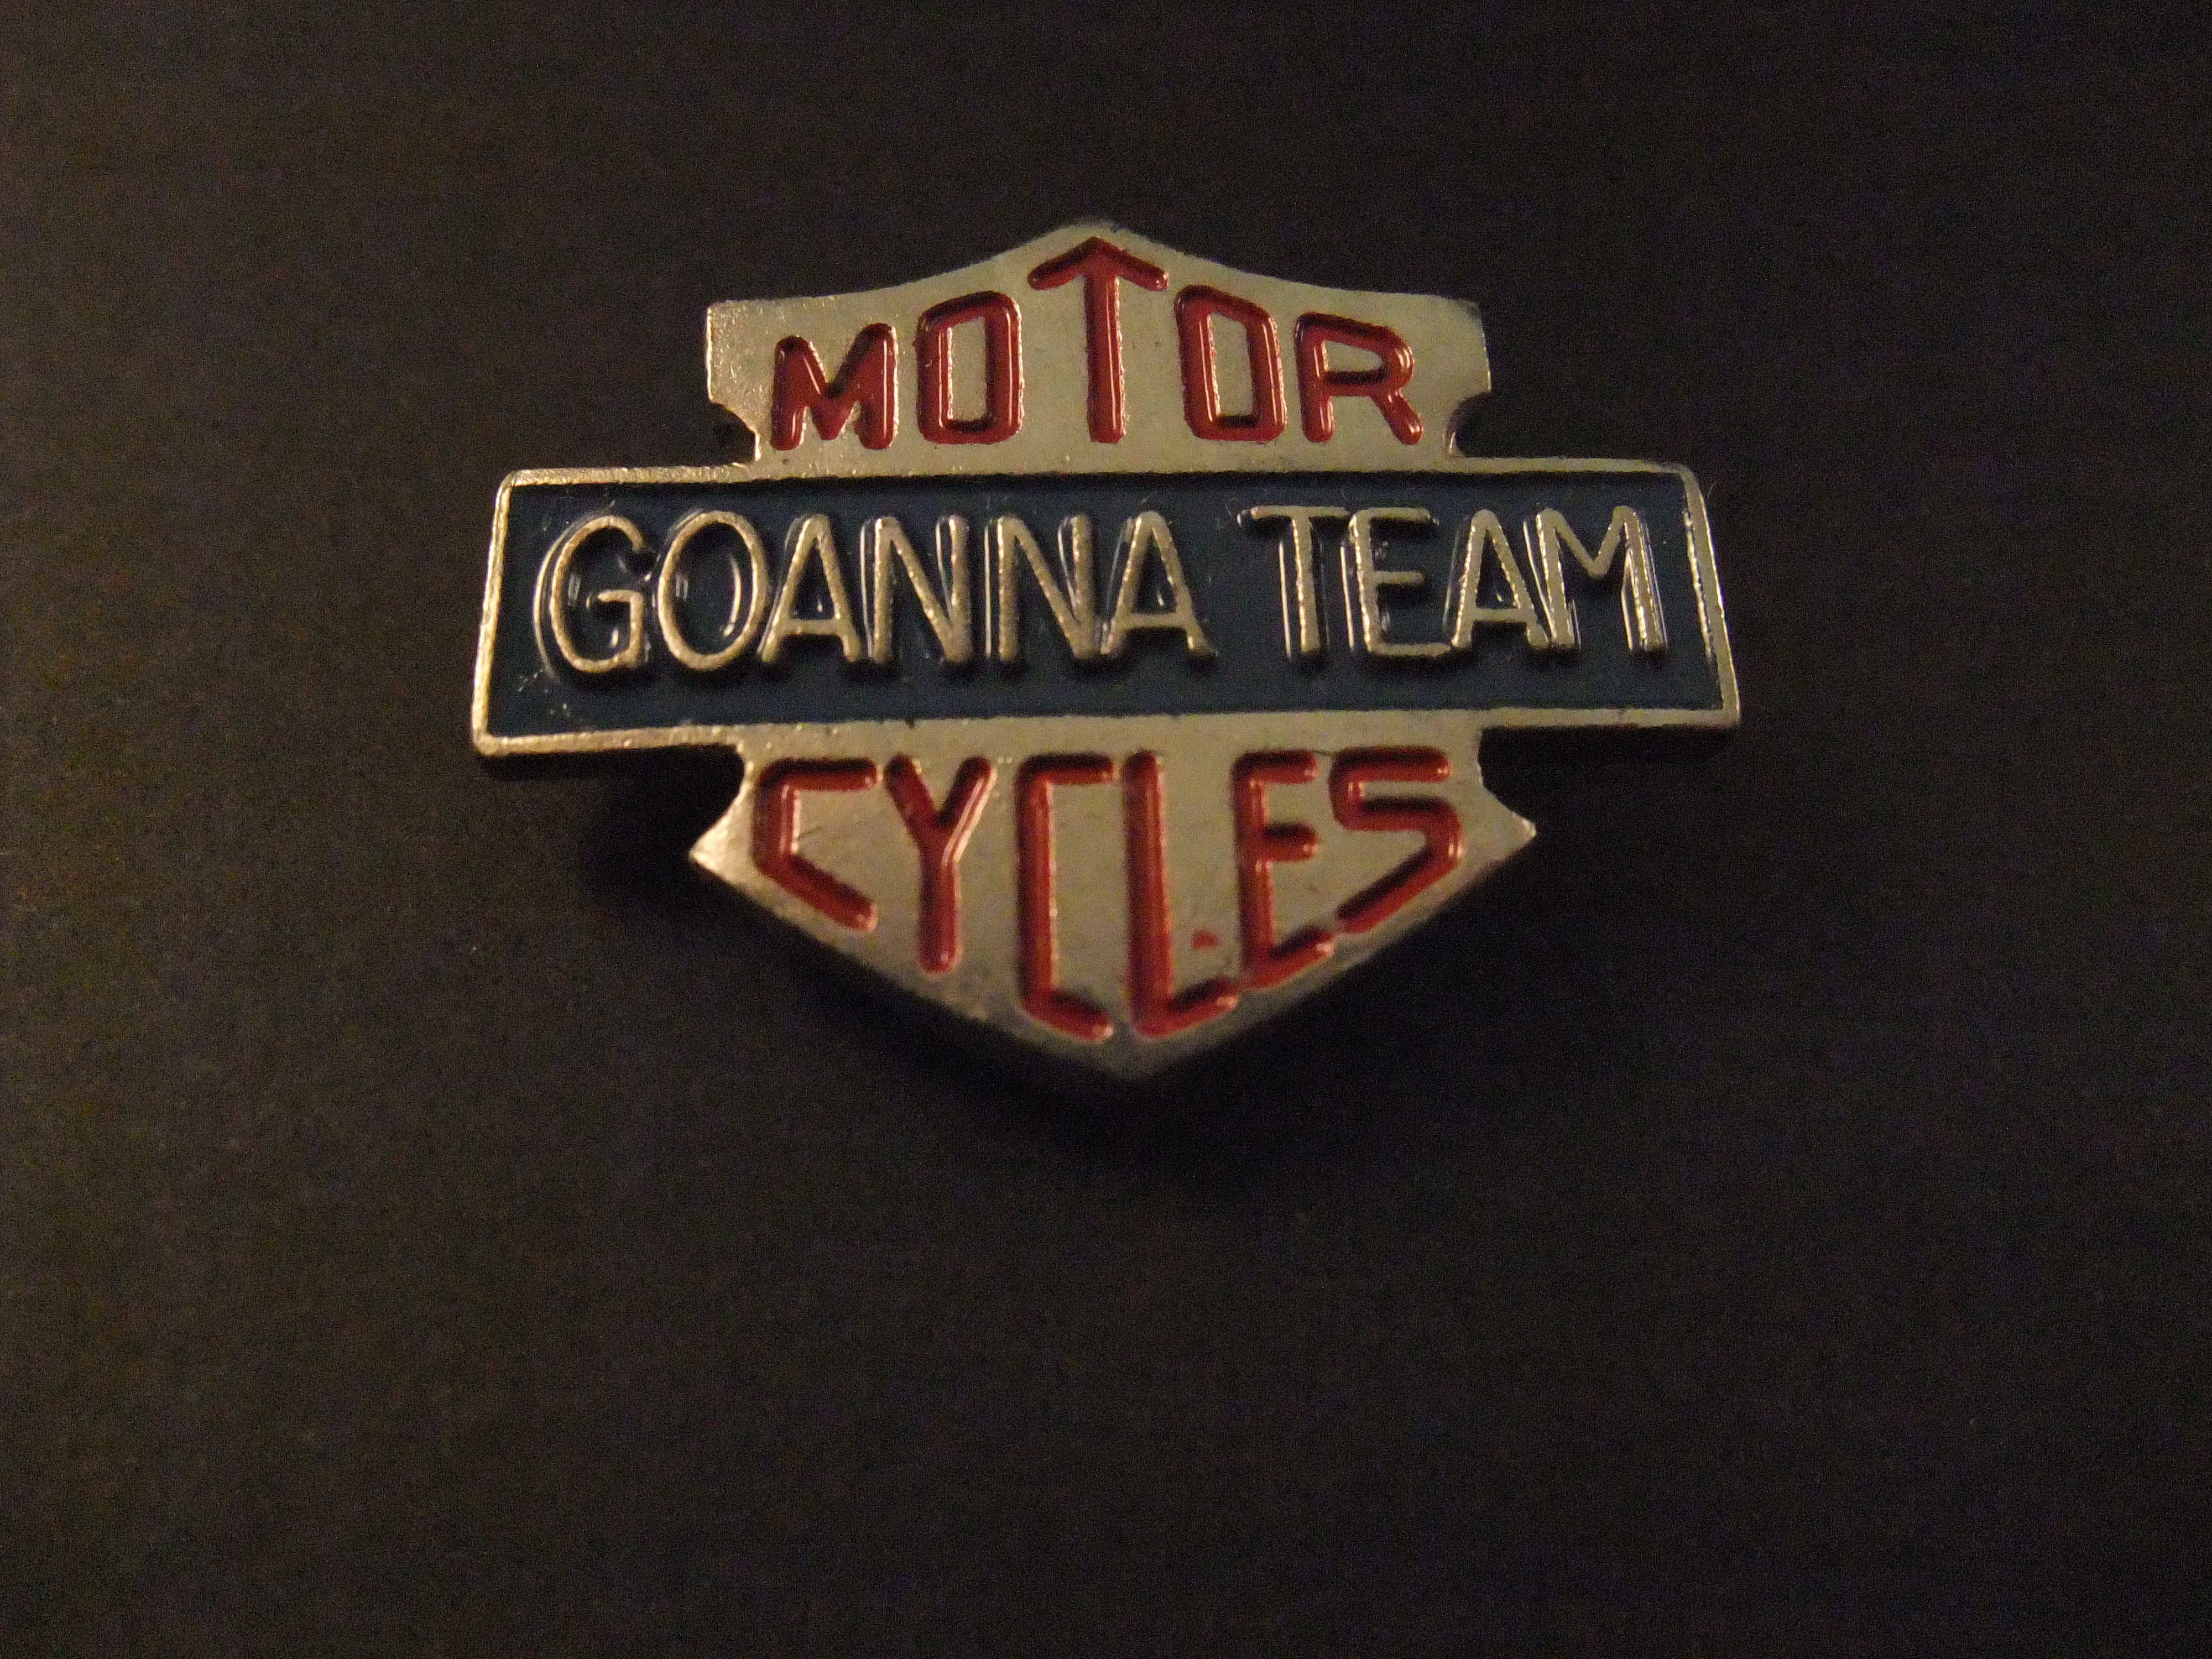 Motor Goanna Cycles Team